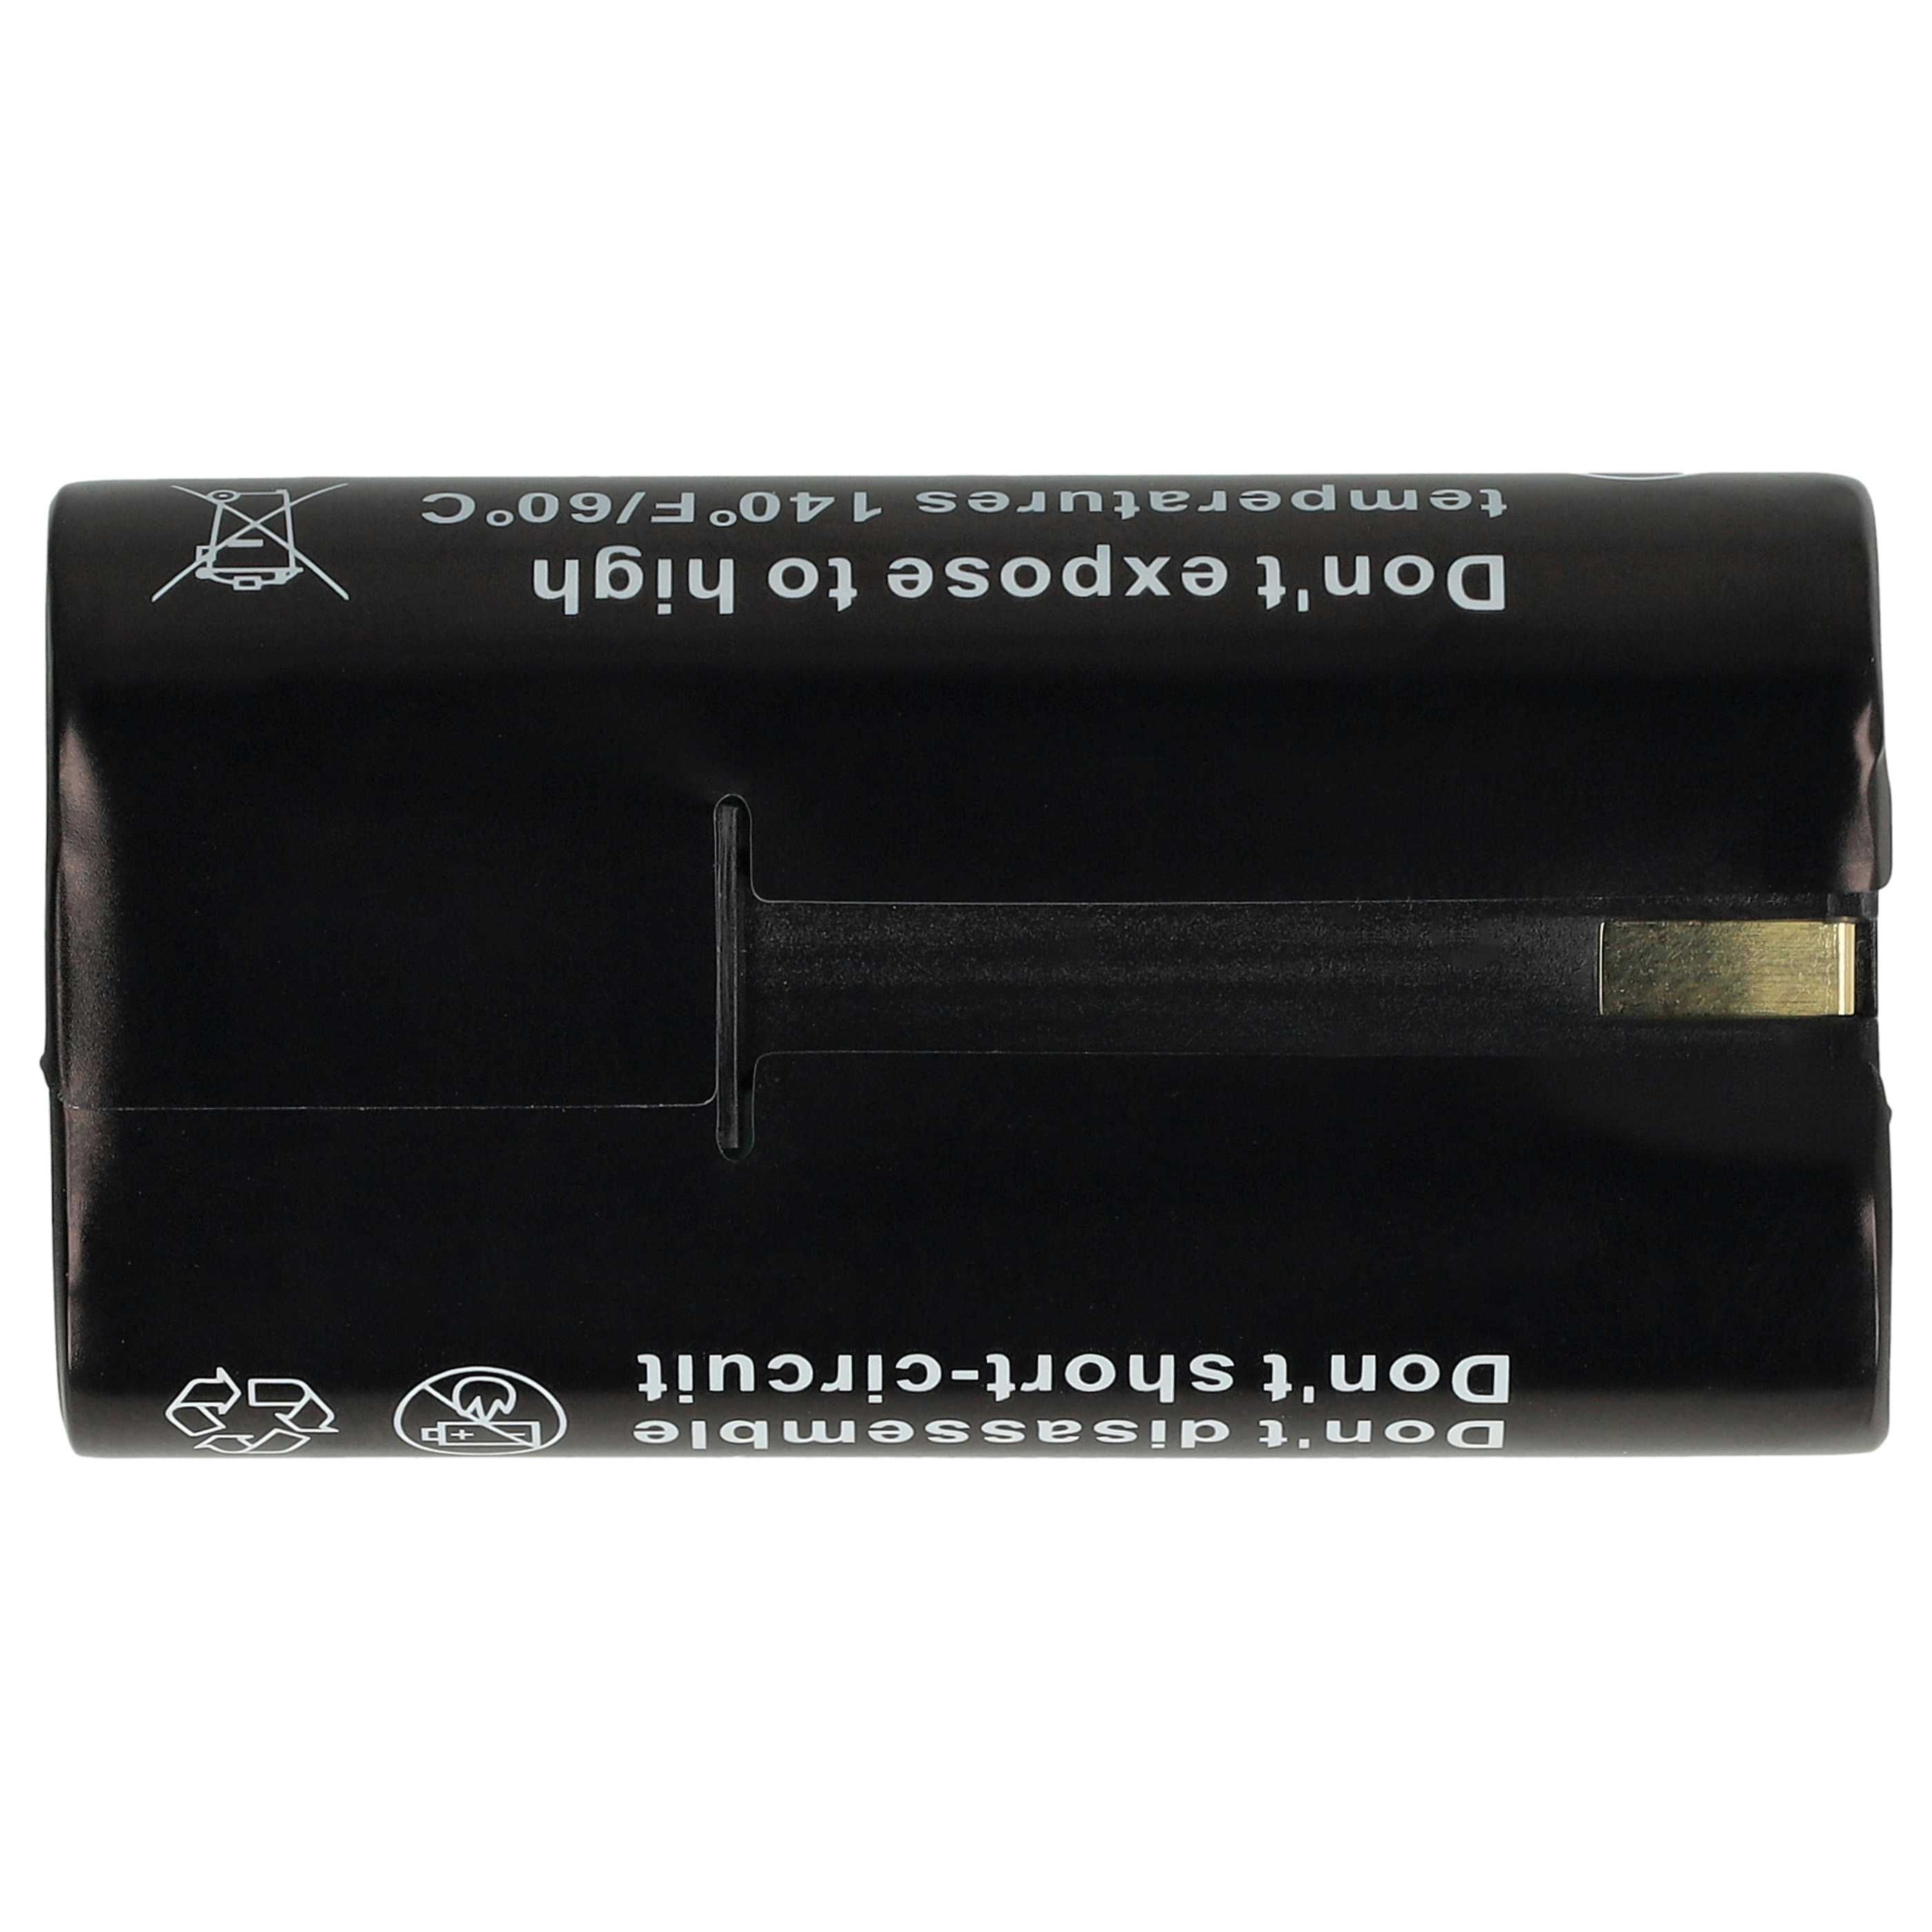 Batteria sostituisce Kodak Klic-8000, RB50 per fotocamera - 1520mAh 3,6V Li-Ion